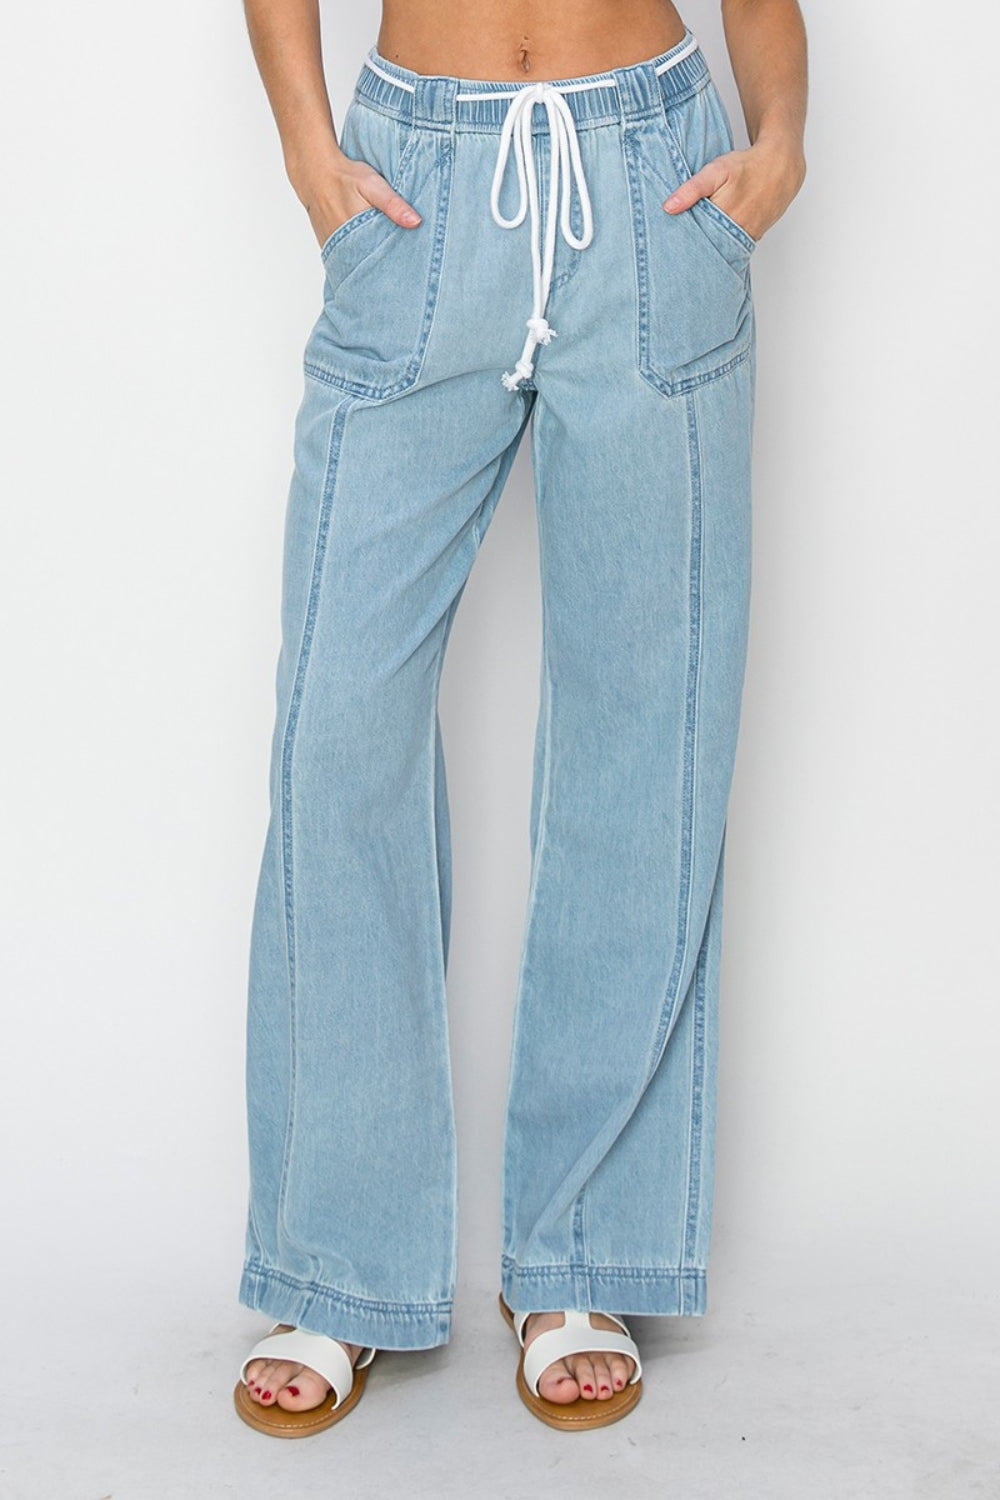 RISEN High Rise Straight Jeans Bottom wear